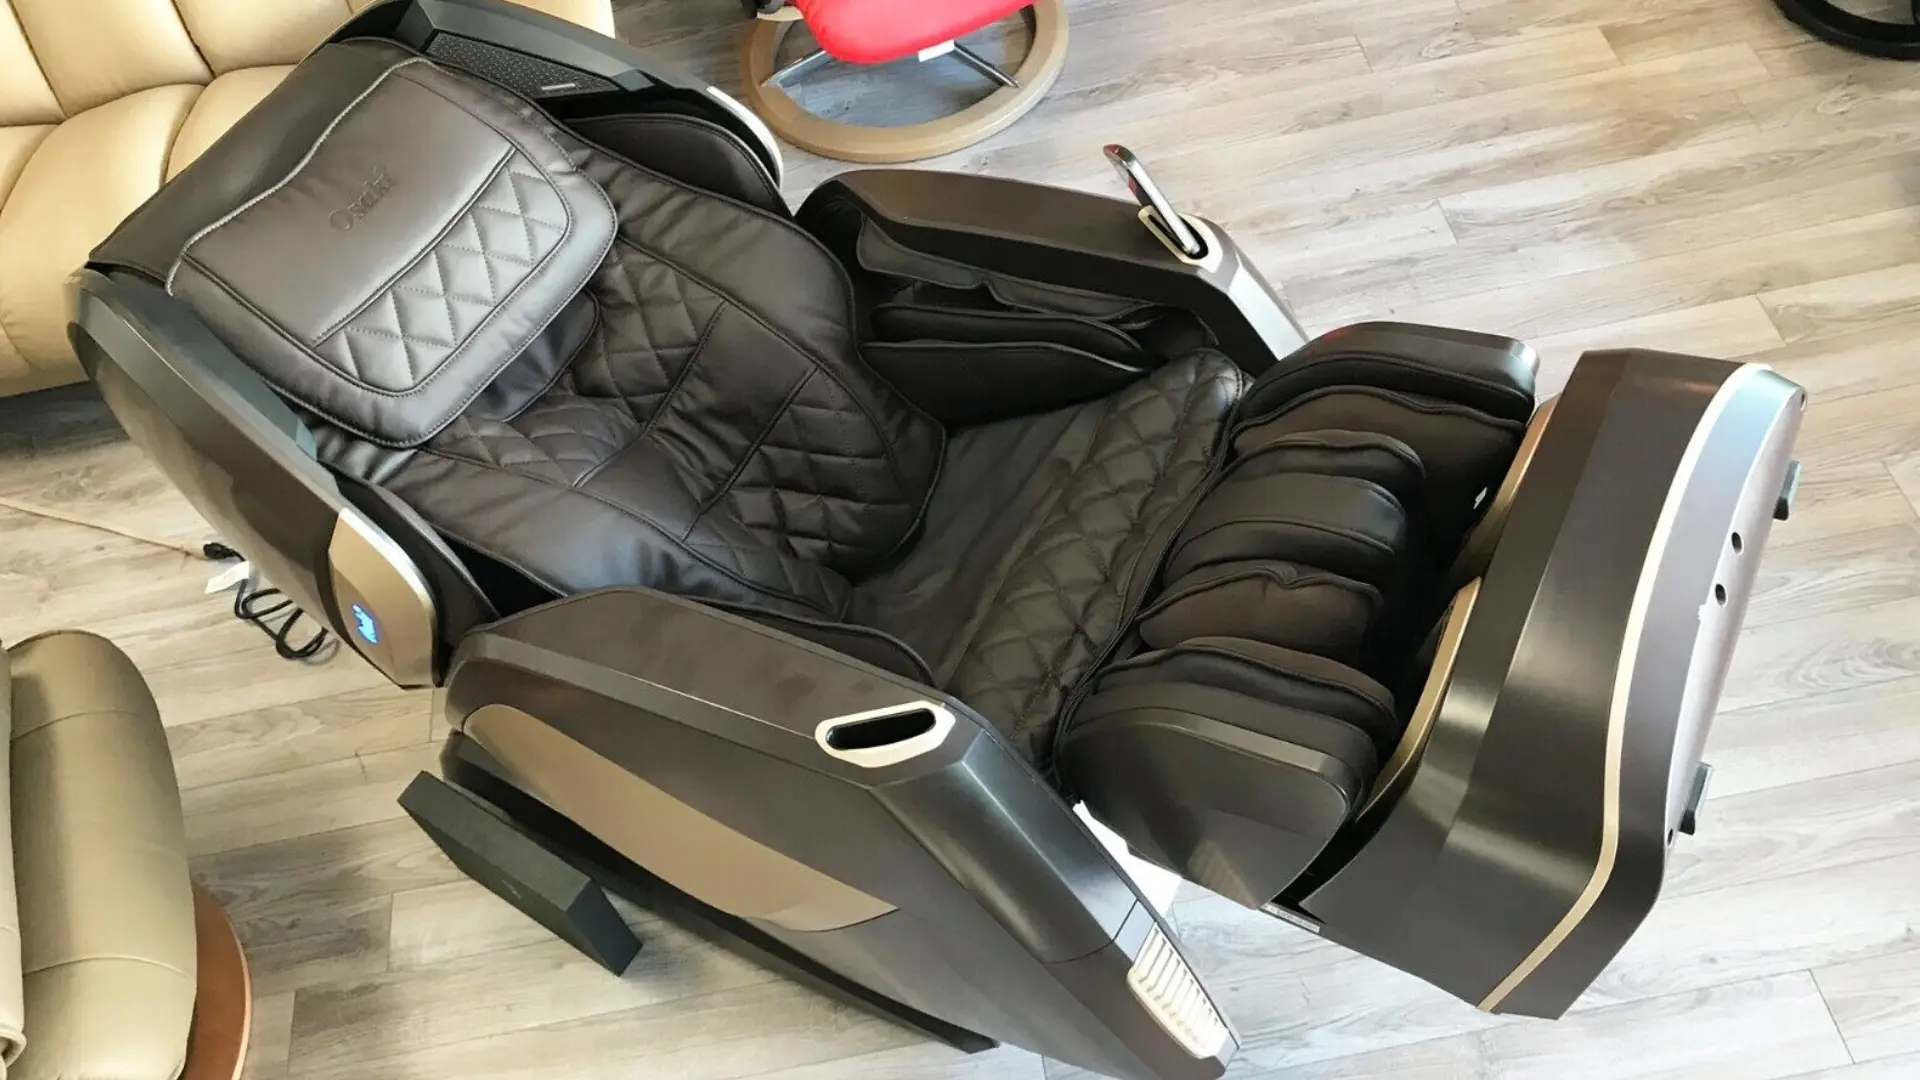 Osaki OS-Pro Maestro 4D Zero Gravity Massage Chair